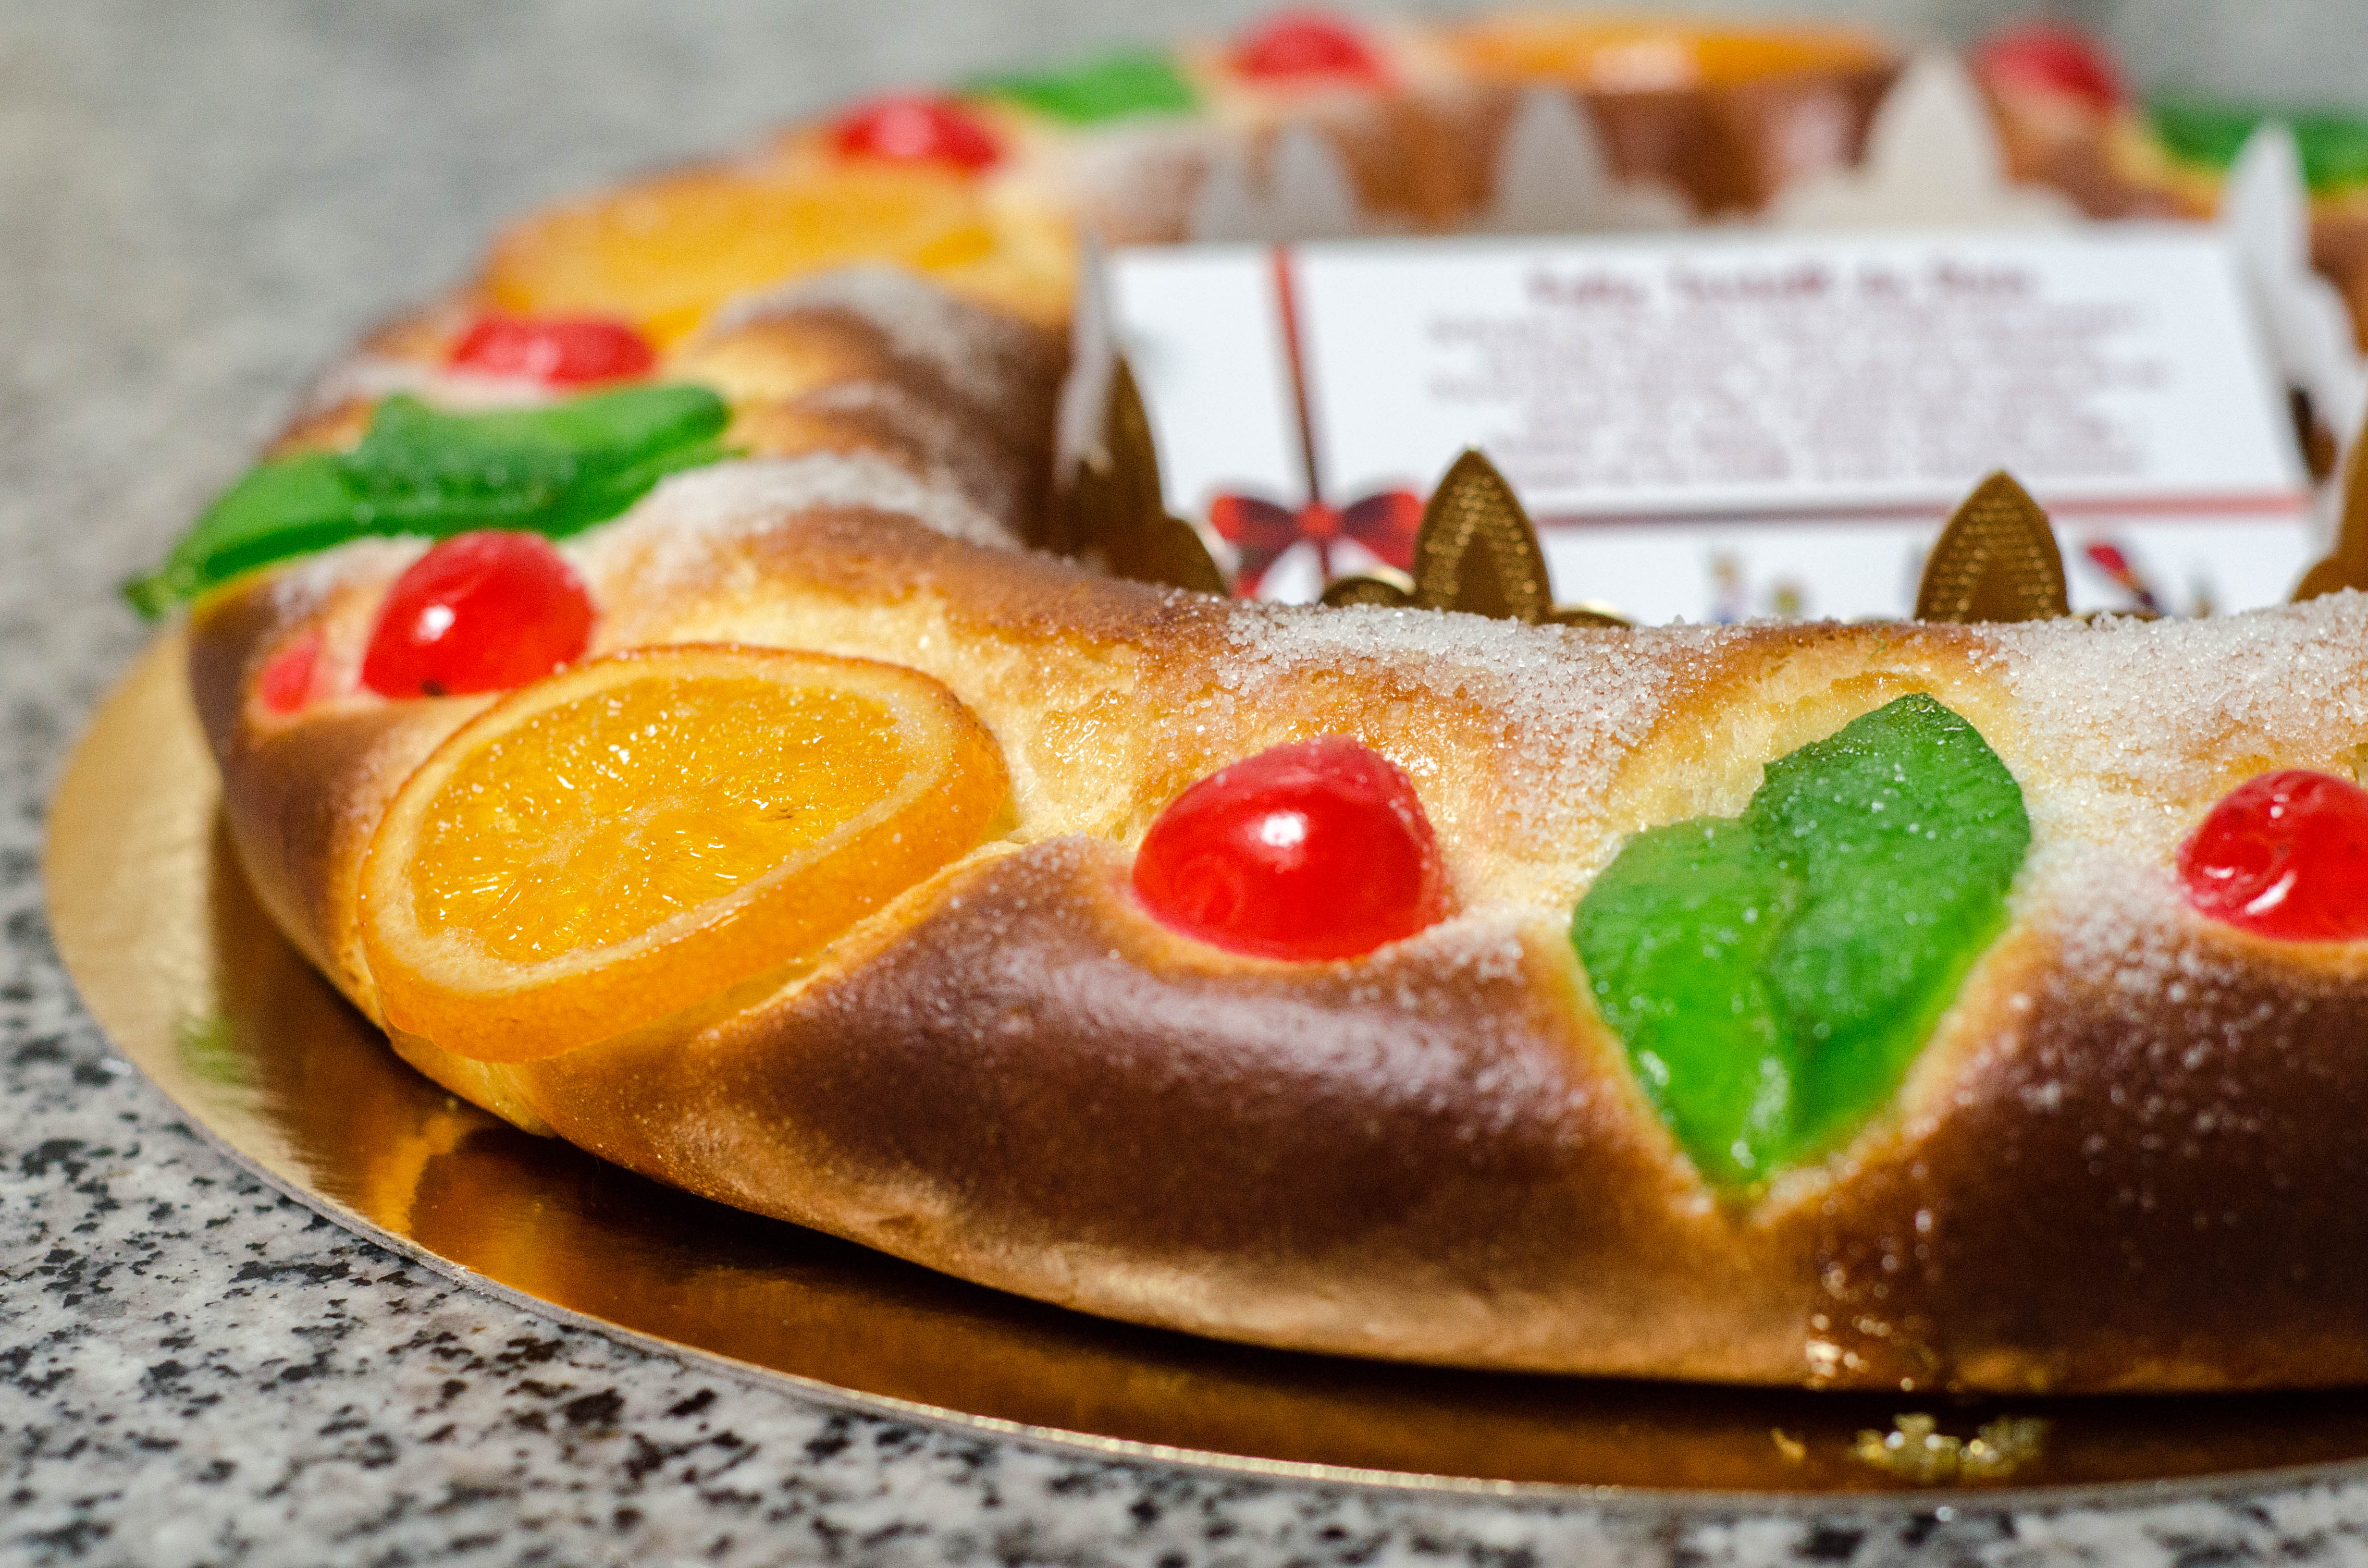 Tortel de Reyes | The three magic kings | Los Reyes Magos | The Solivagant Soul